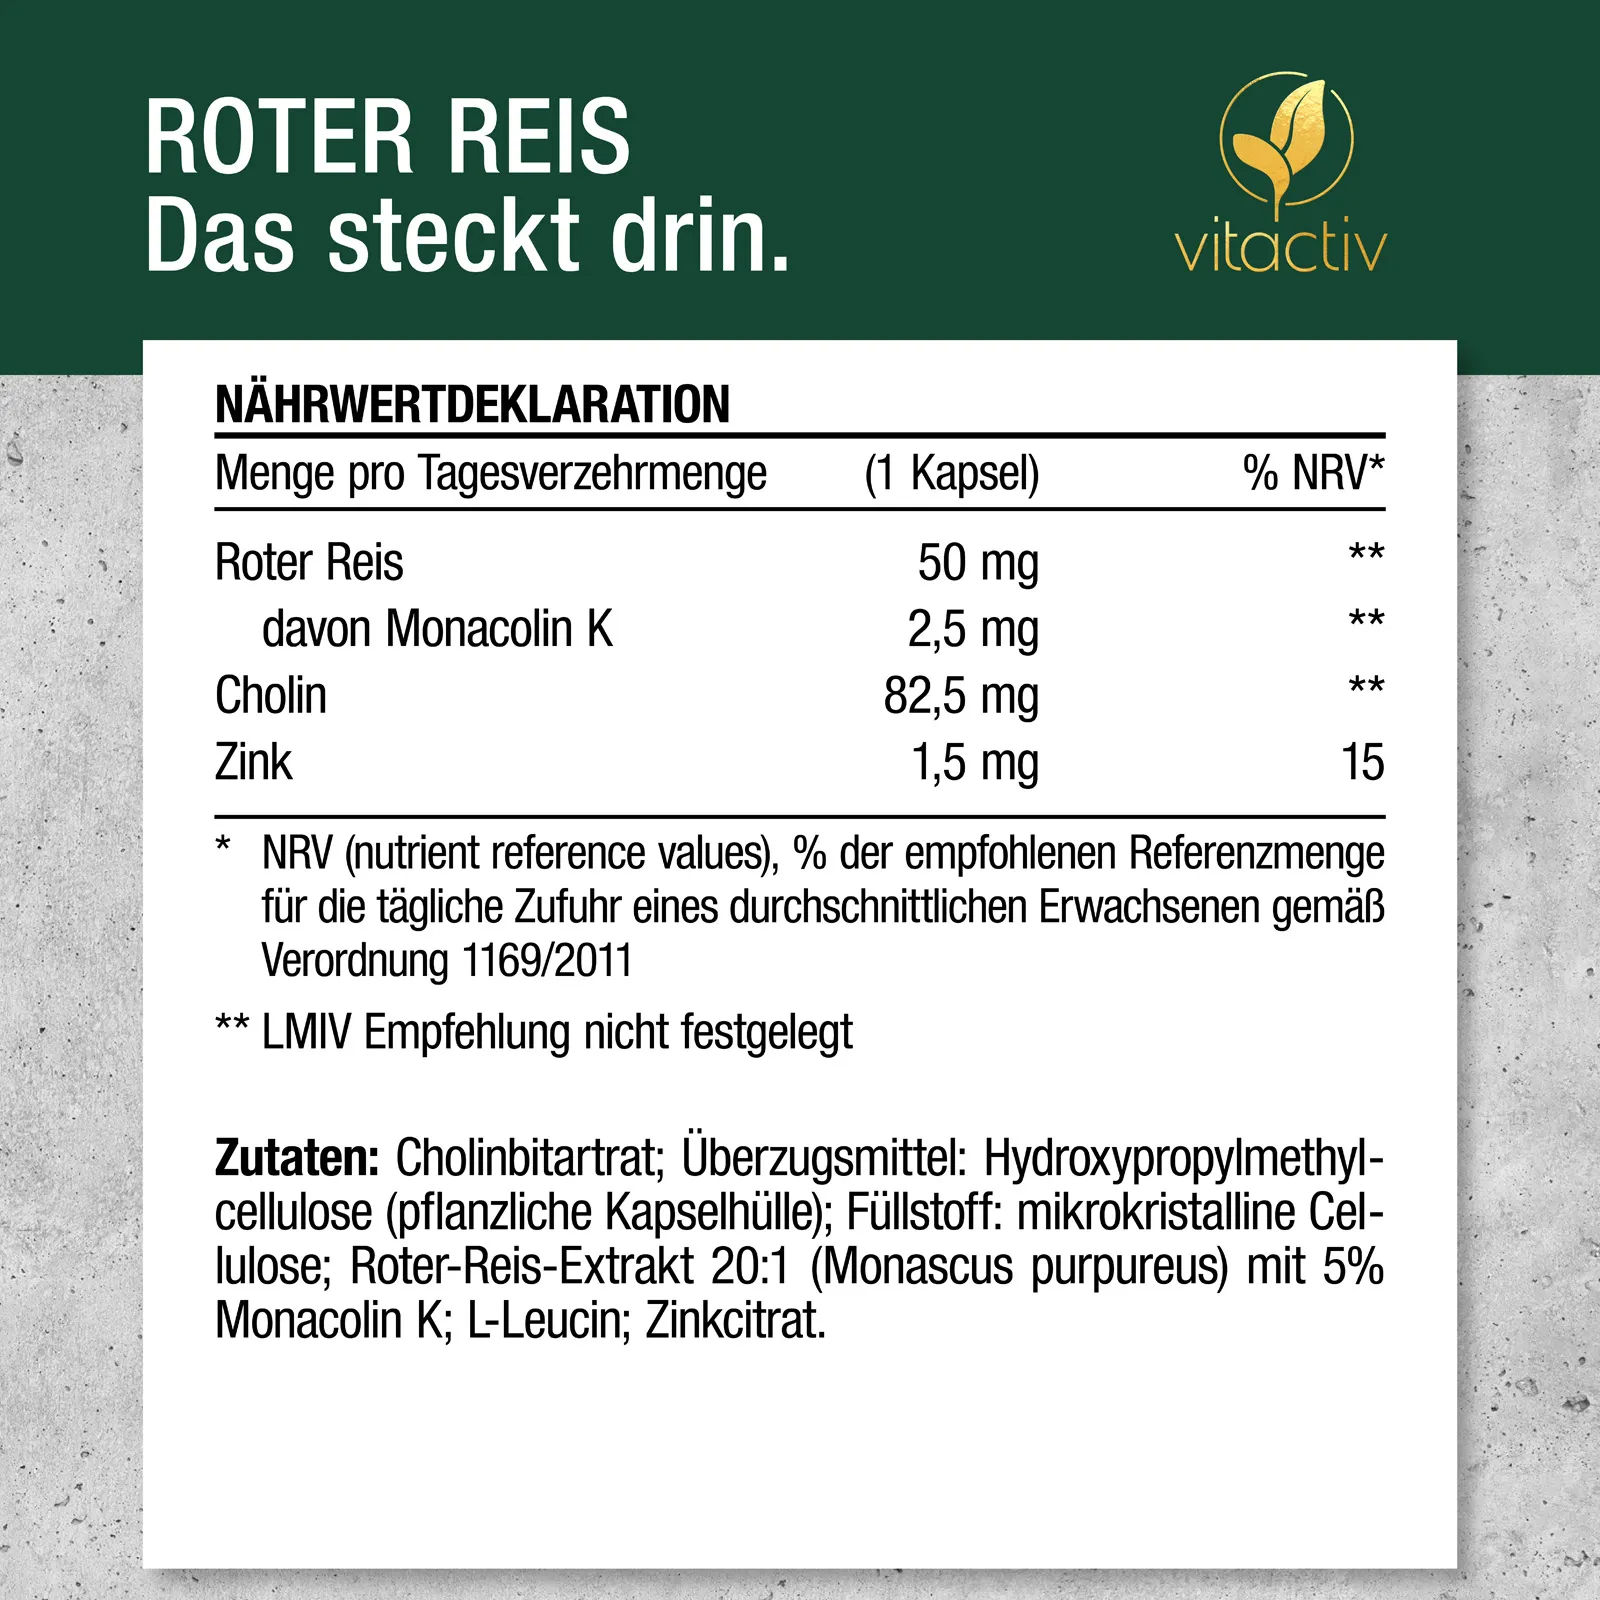 ROTER REIS (Monacolin K) + Cholin + Zink